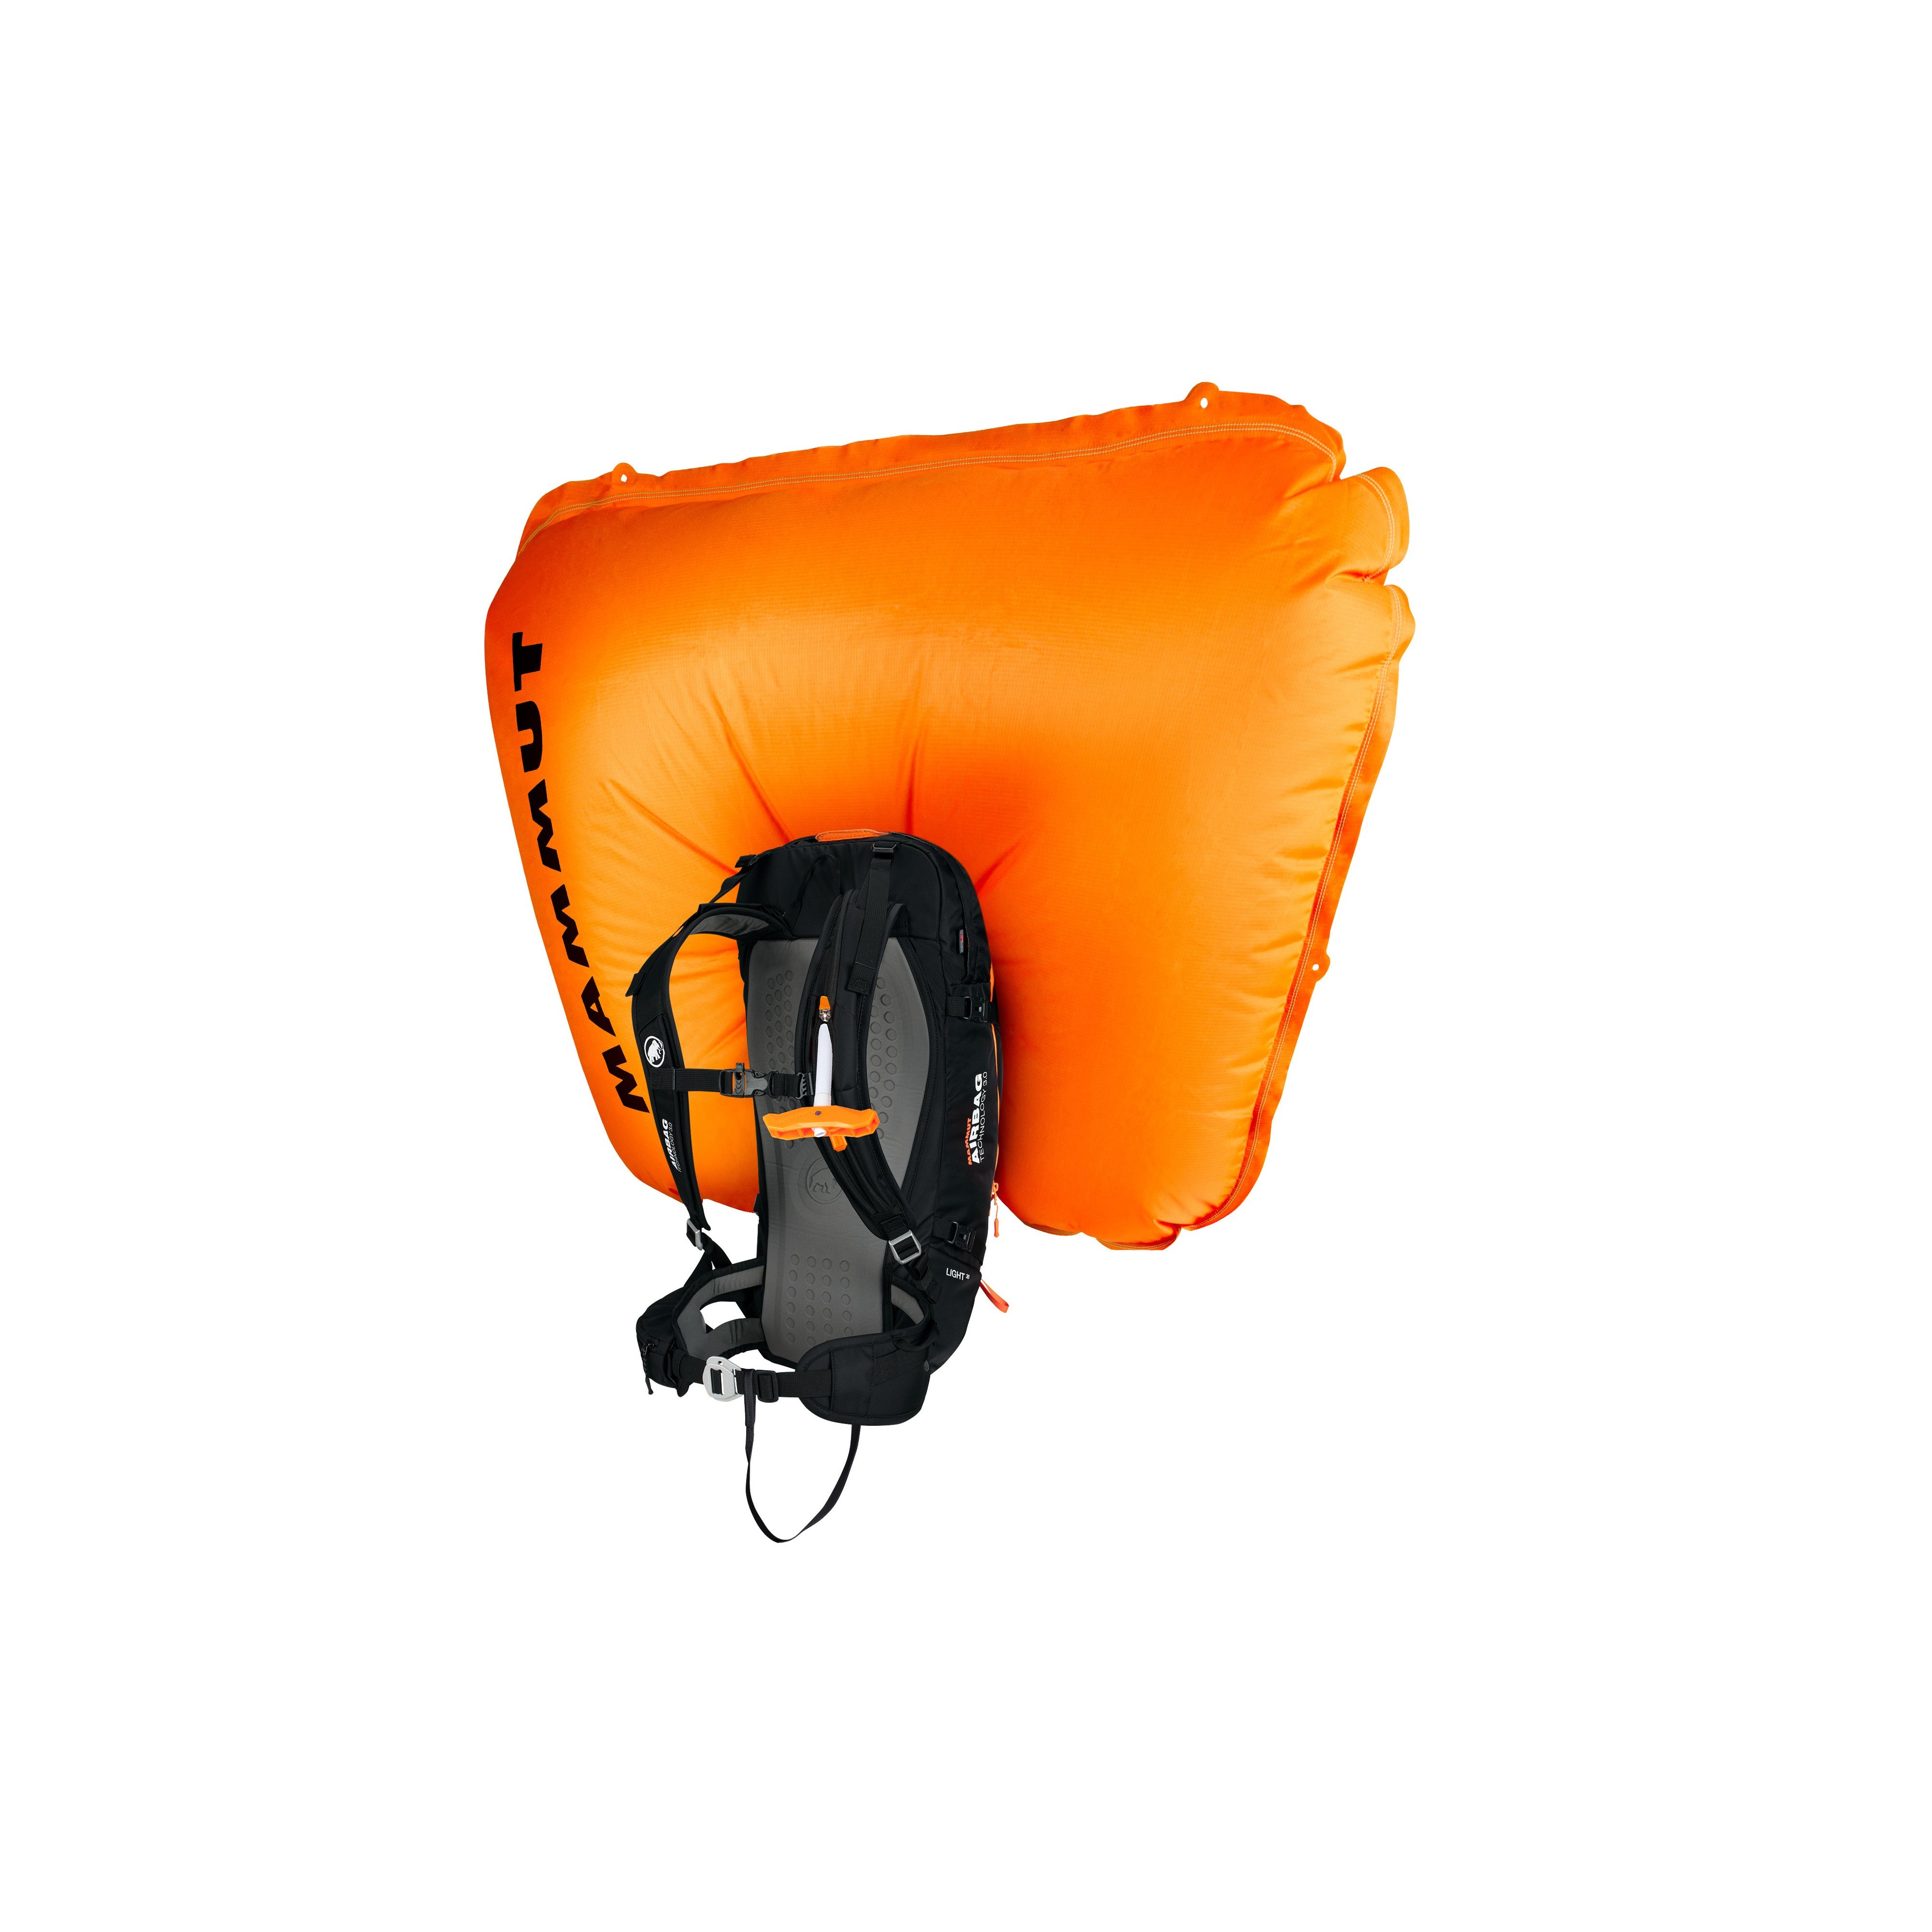 Light Removable Airbag 3.0 - black-vibrant orange, 30 L product image